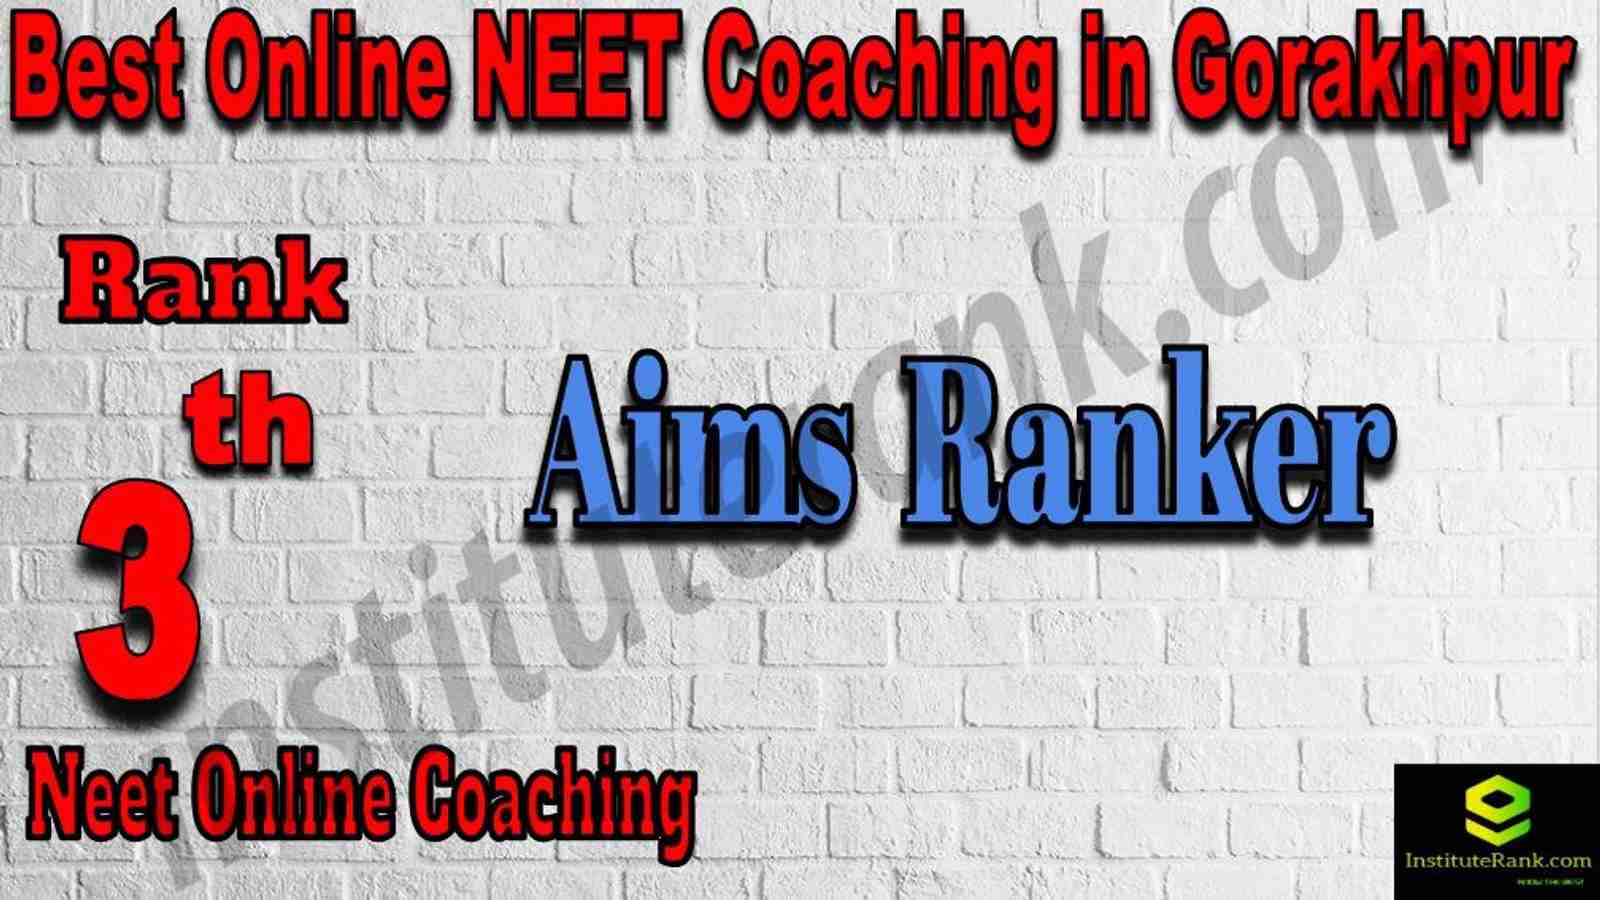 3rd Best Online Neet Coaching in Gorakhpur